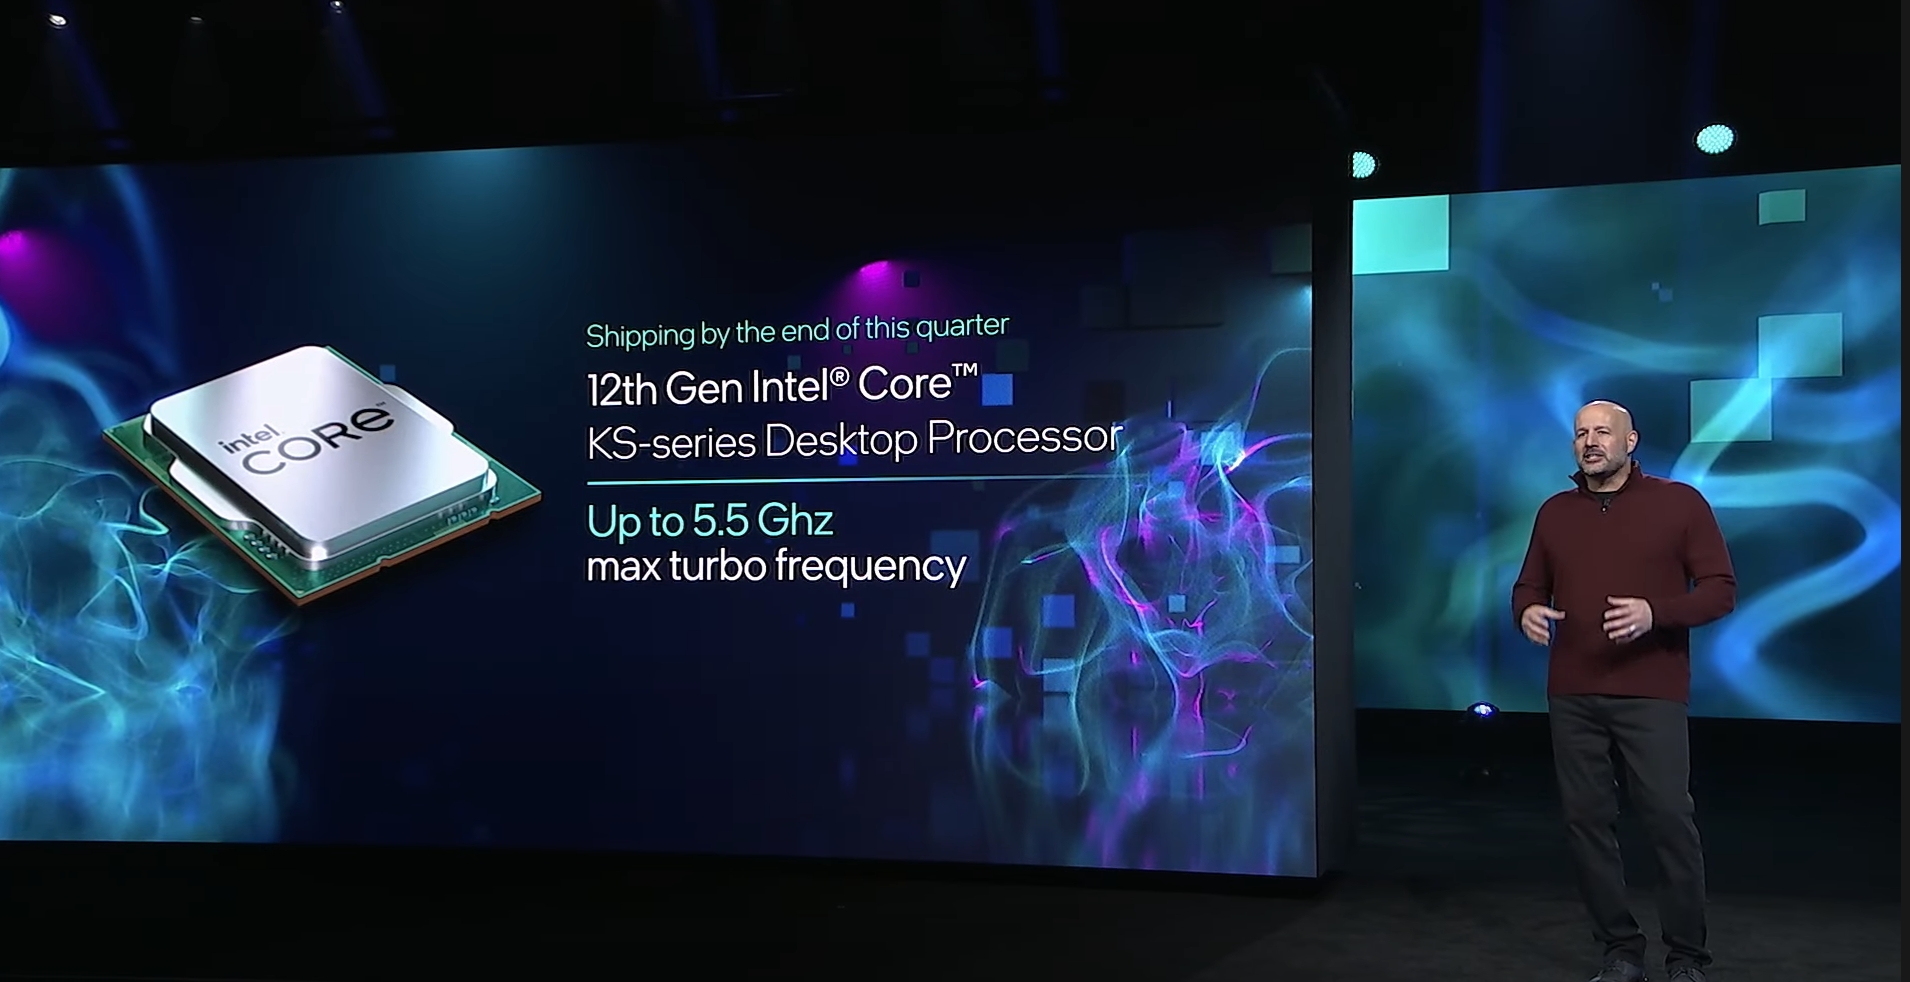 Intel reveals the i9 12900KS during its CES 2022 presentation